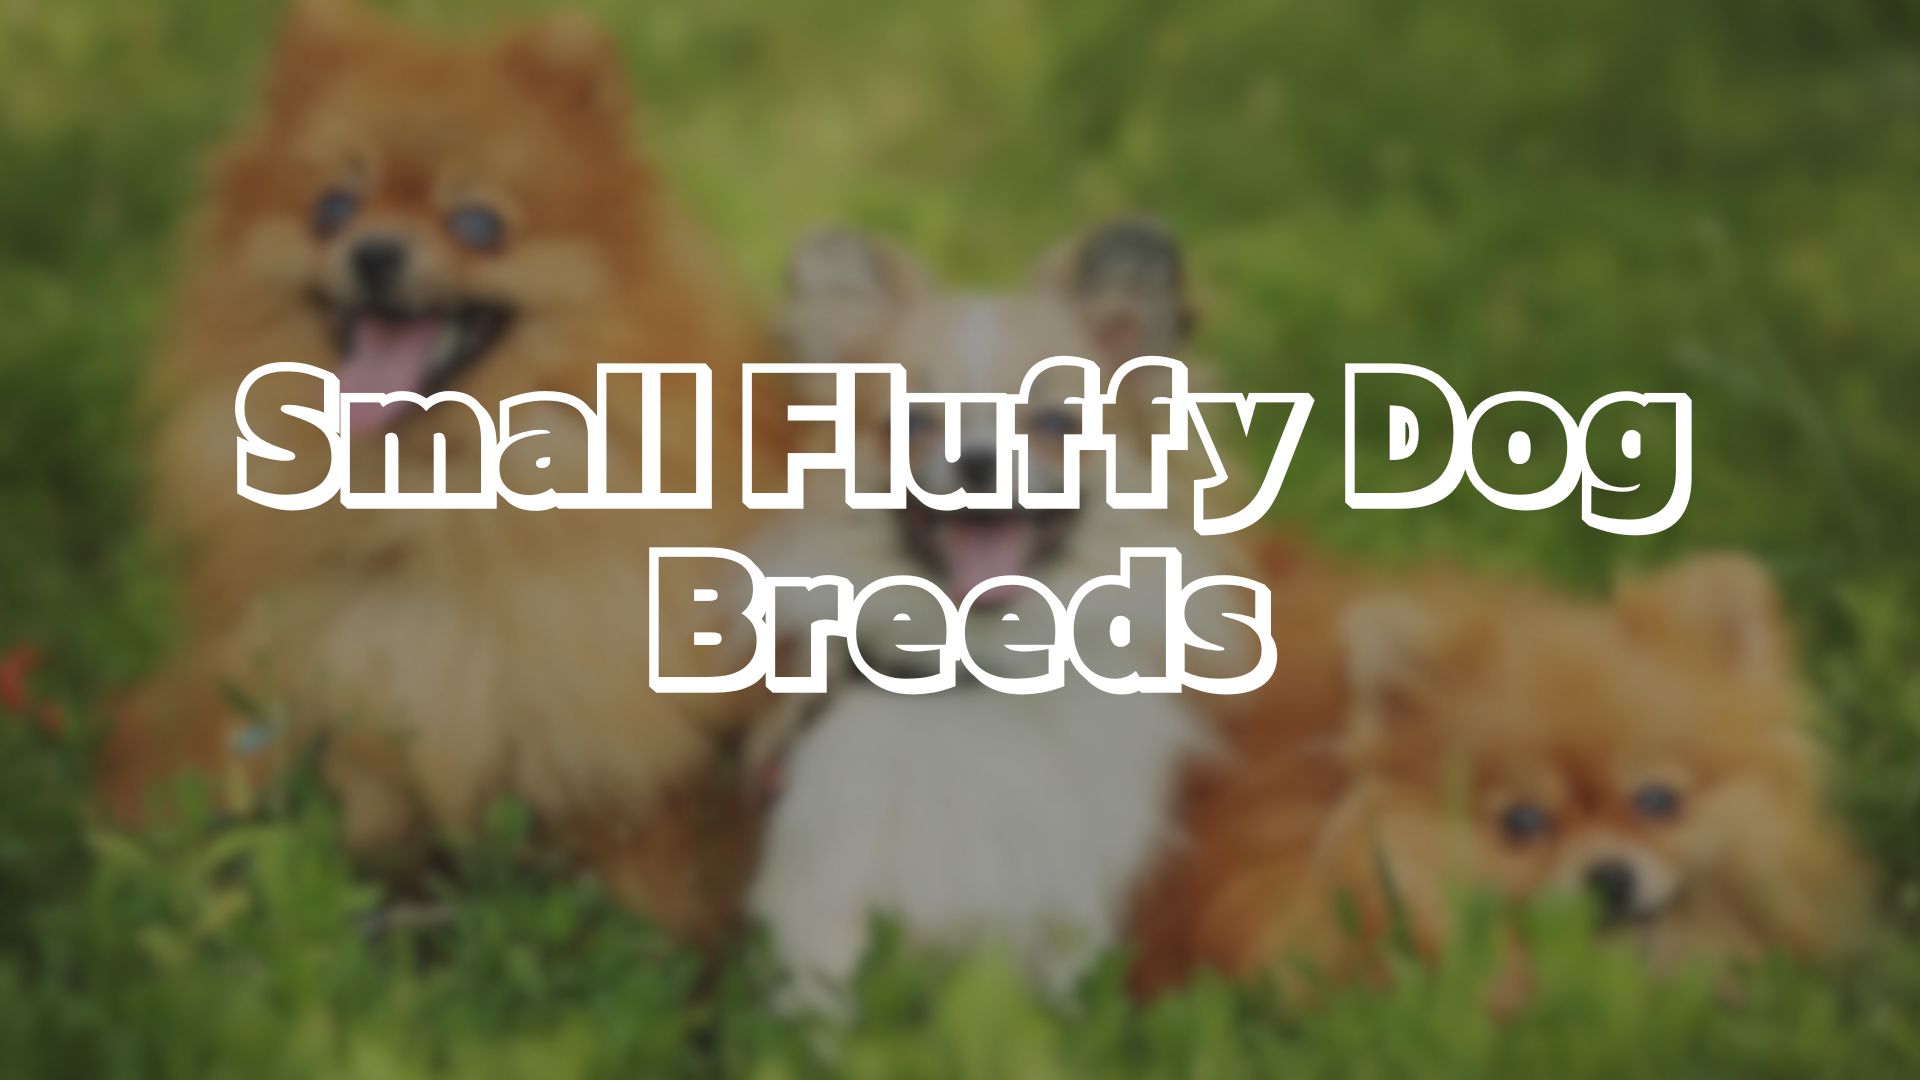 Small Fluffy Dog Breeds